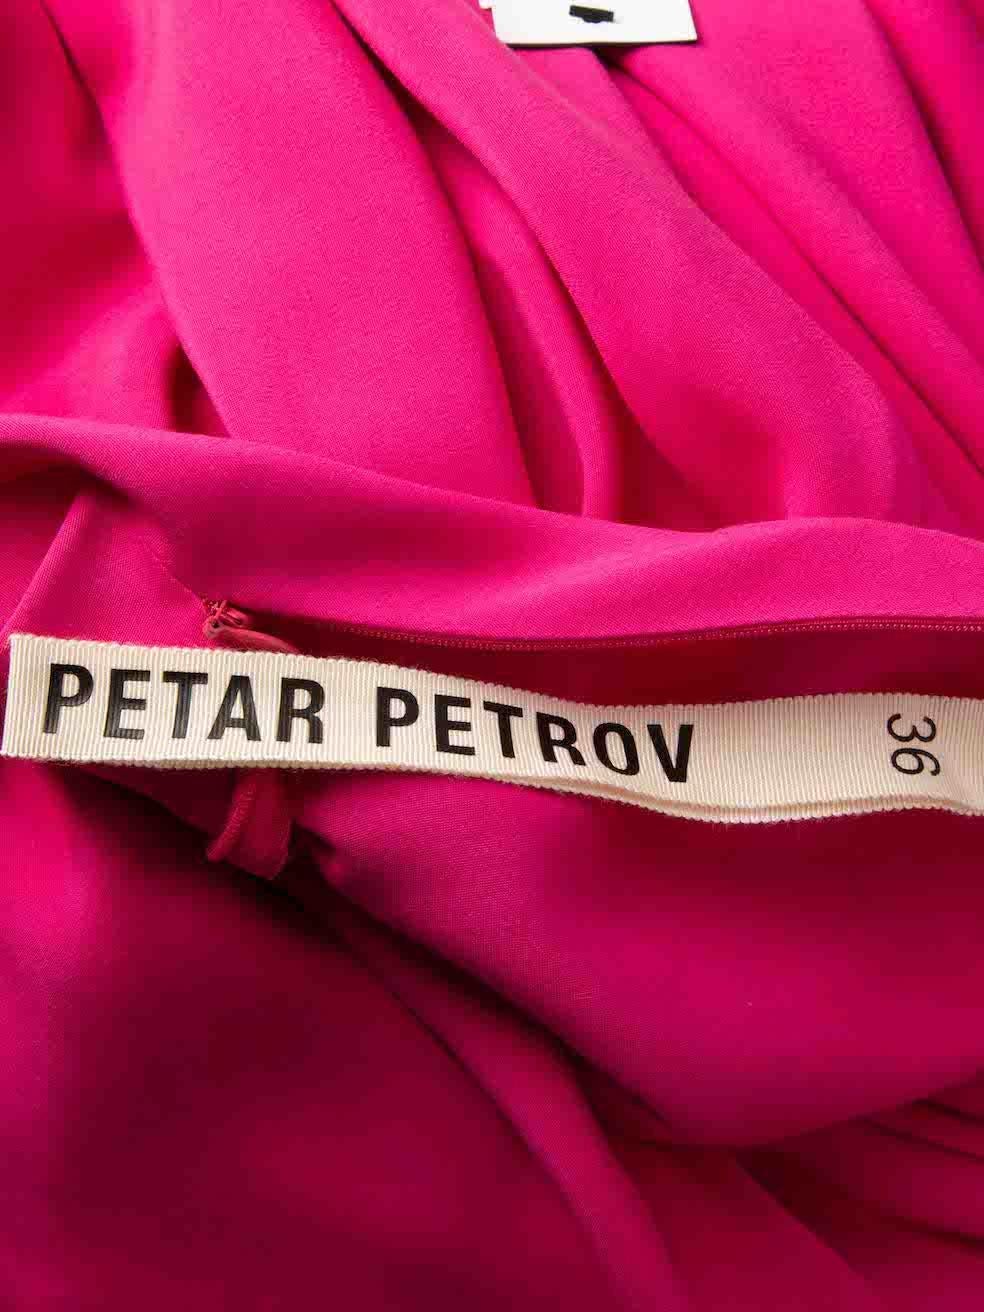 Women's Spring 2022 Pink Long Sleeves Midi Dress Size S